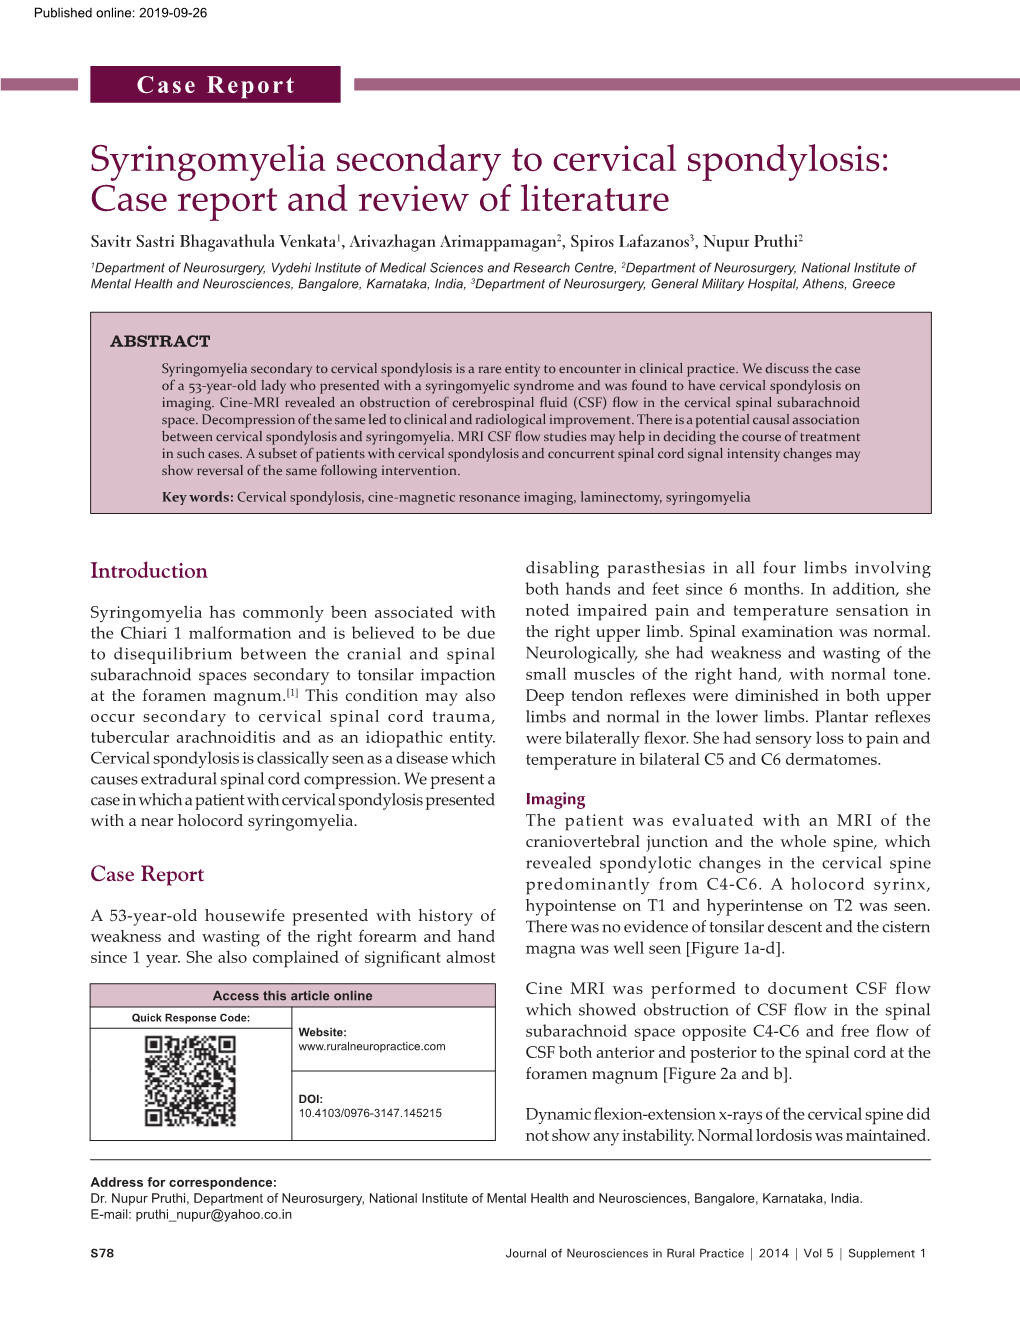 Syringomyelia Secondary to Cervical Spondylosis: Case Report And